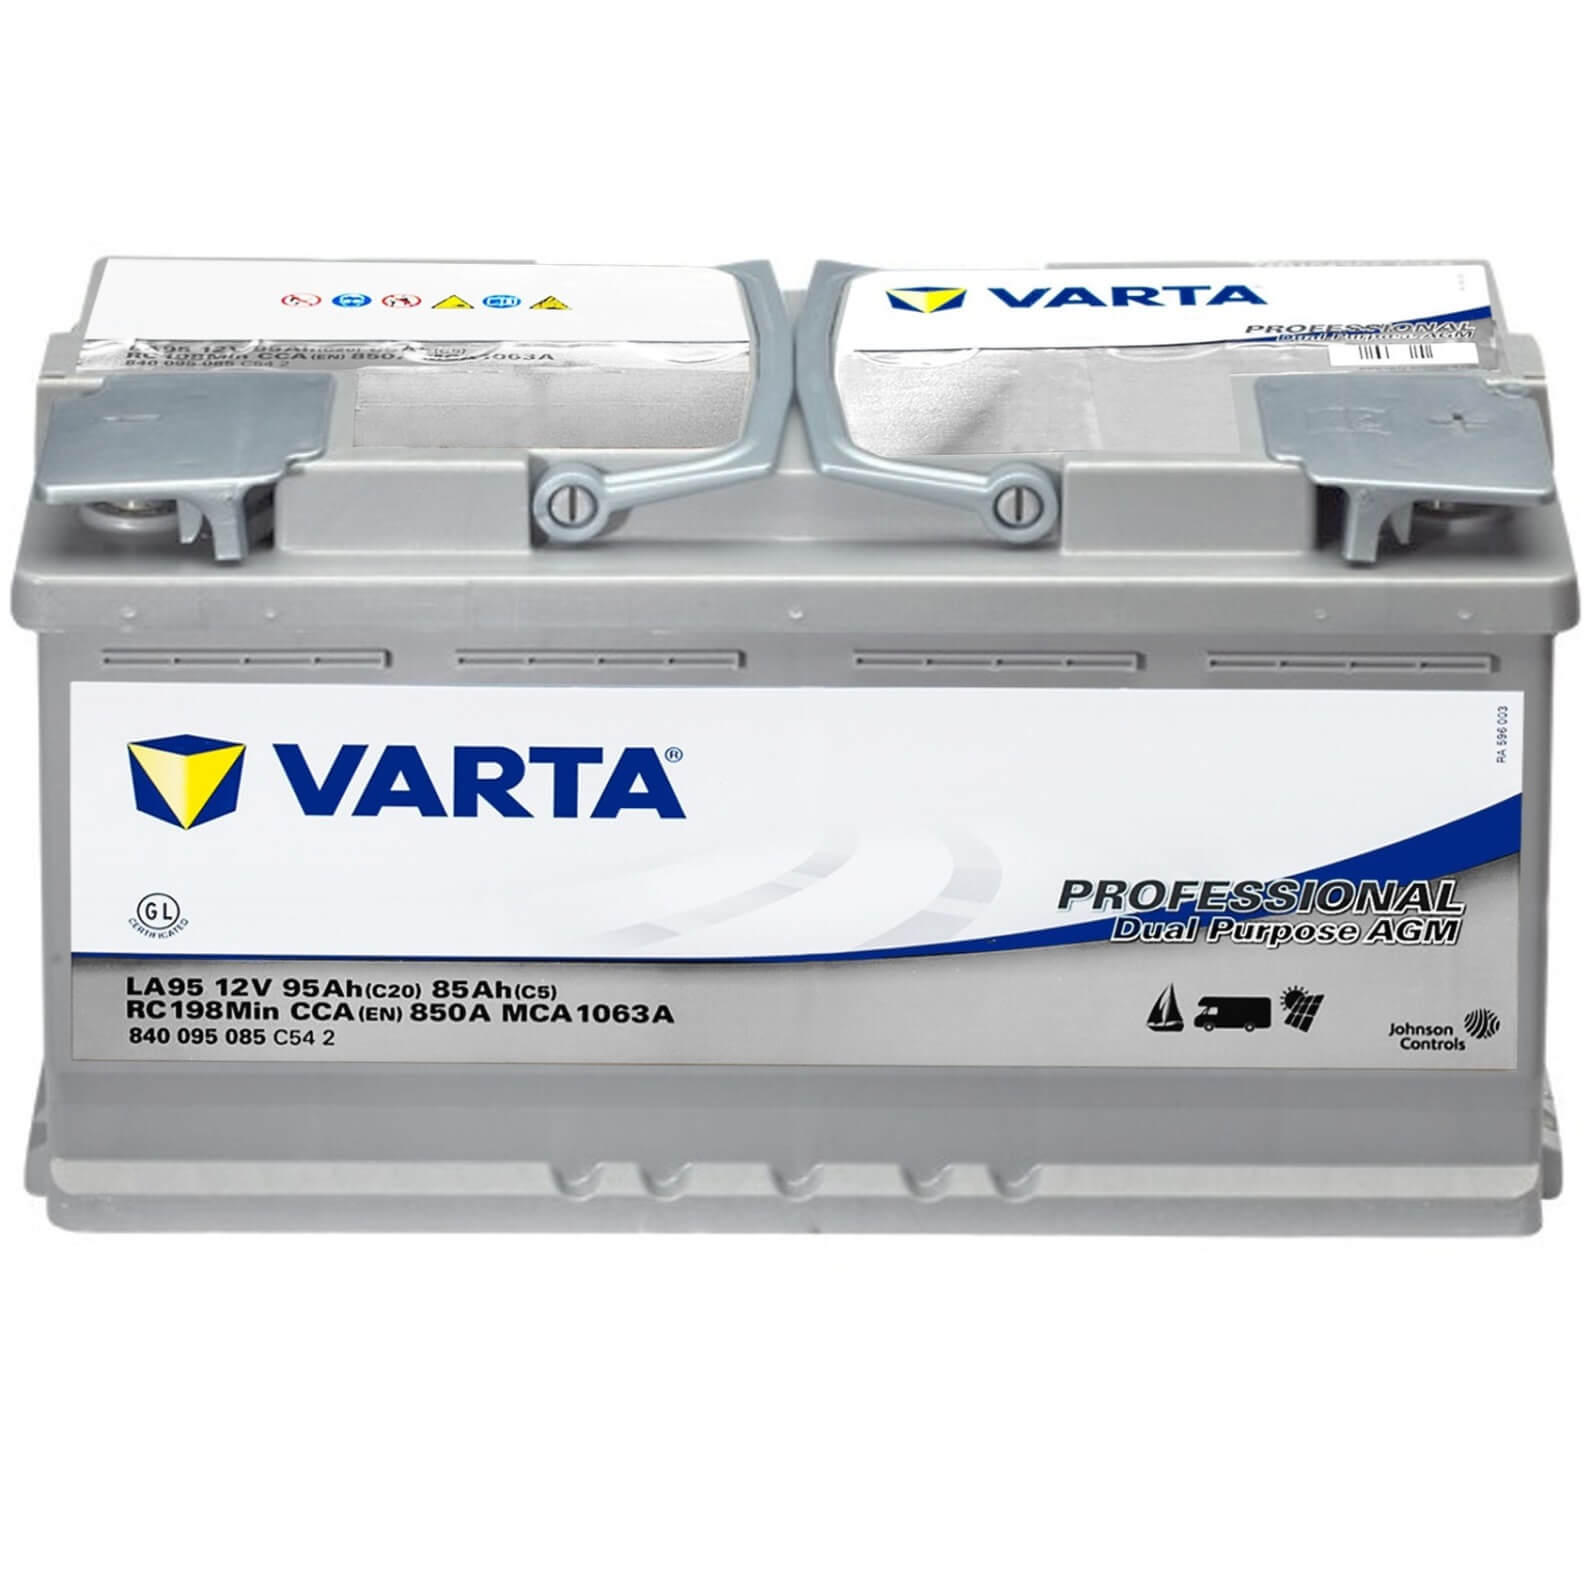 Varta Professional DC AGM LA95 12V 95 Ah Batterie, kompakte Masse extrem  flach! LA-95 LA 95